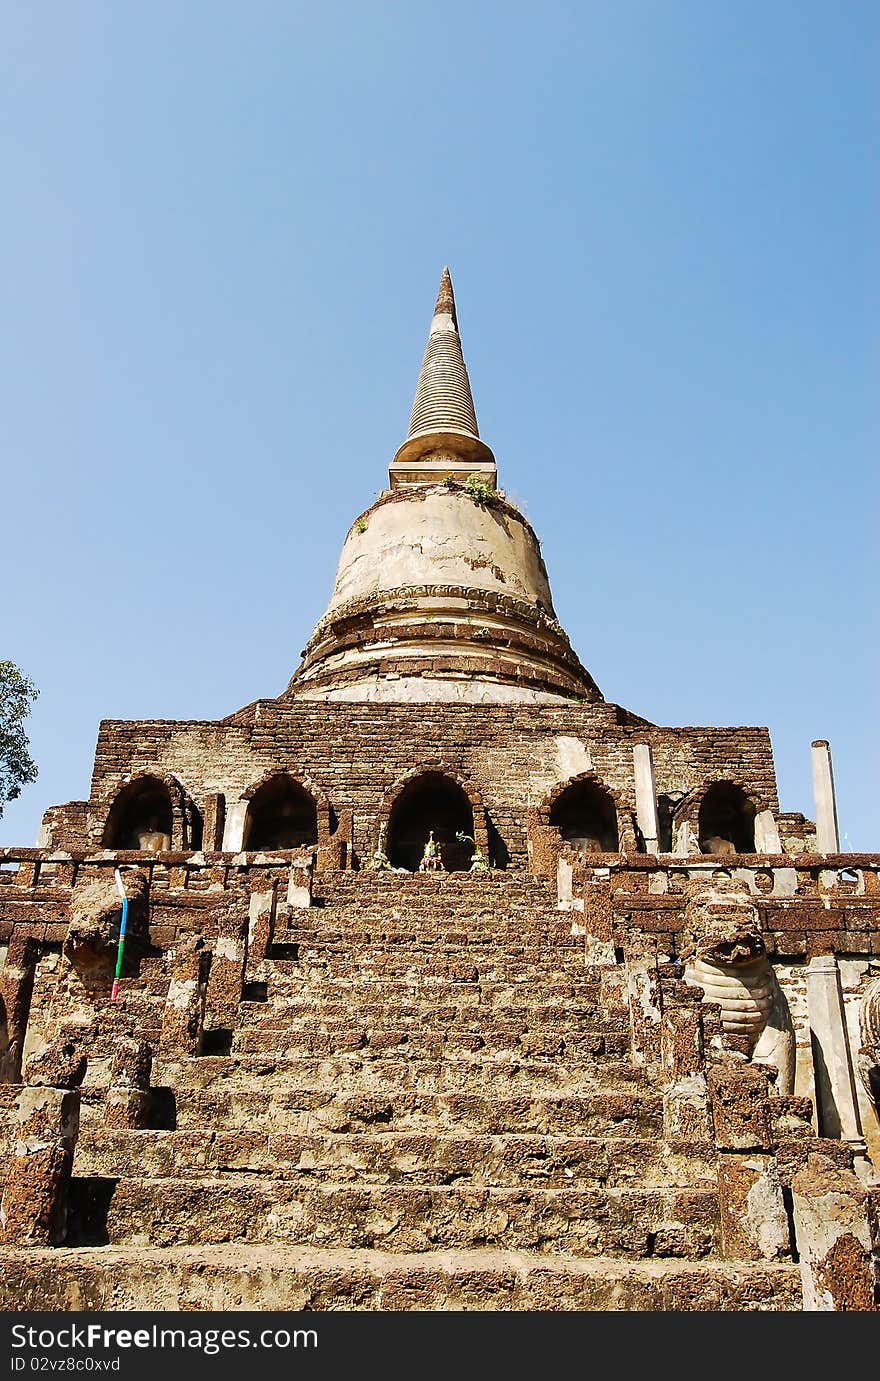 Ancient Buddha Pagoda in Thai Ancient ruins Temple